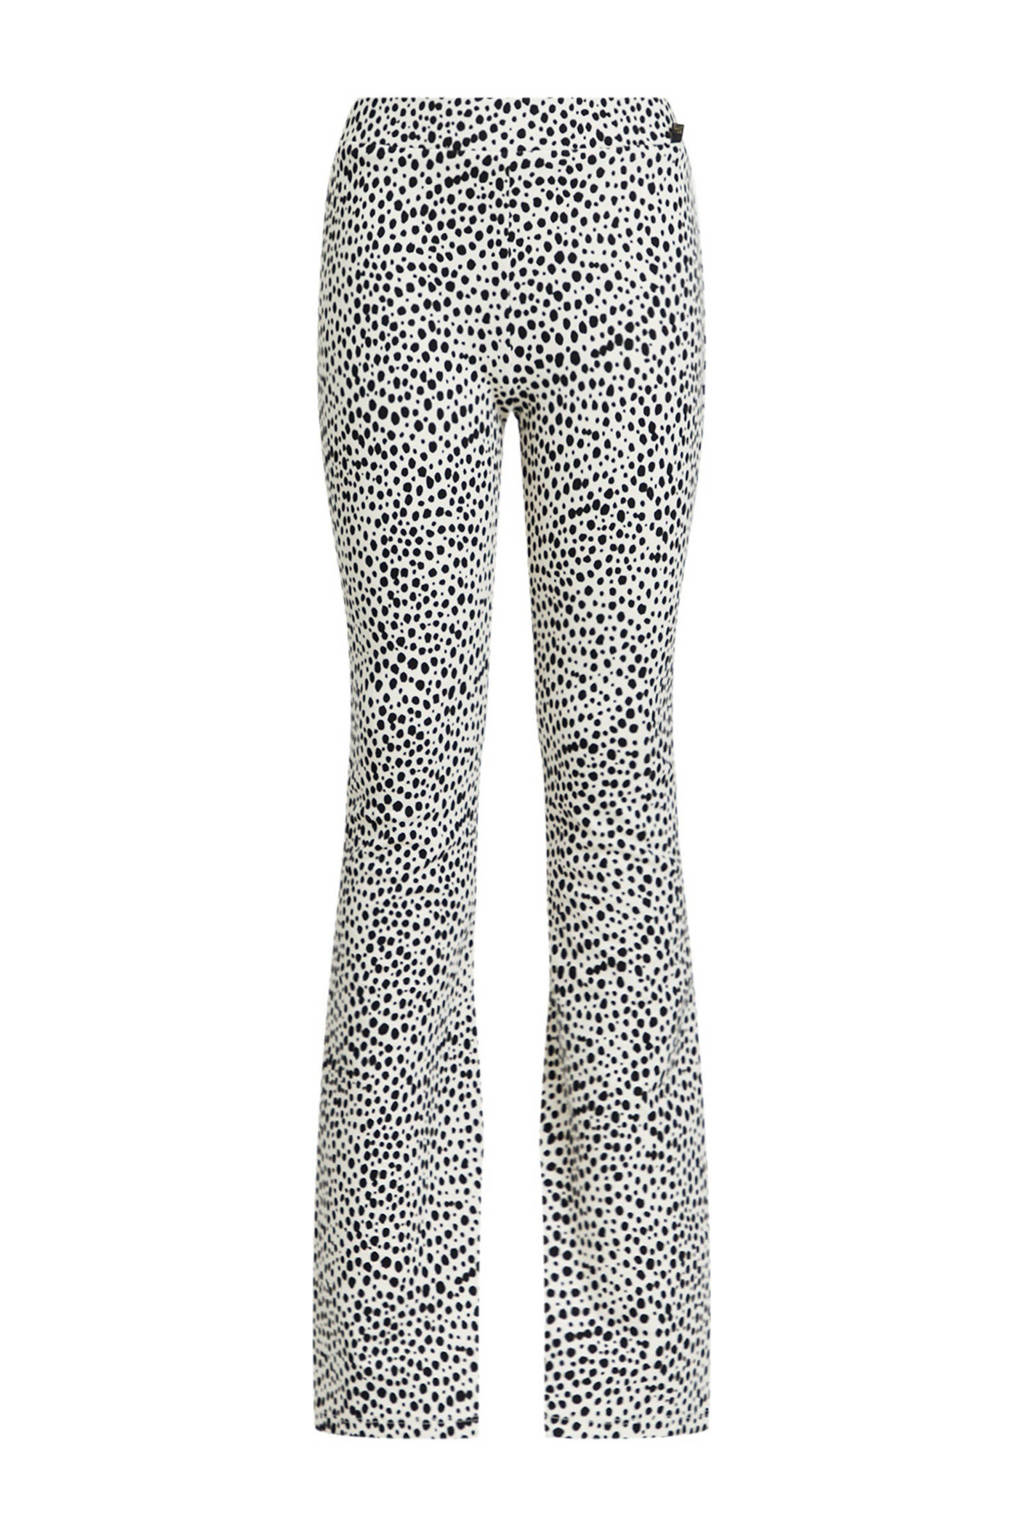 Voorkeur Polair kin WE Fashion flared broek met stippen wit/zwart | wehkamp